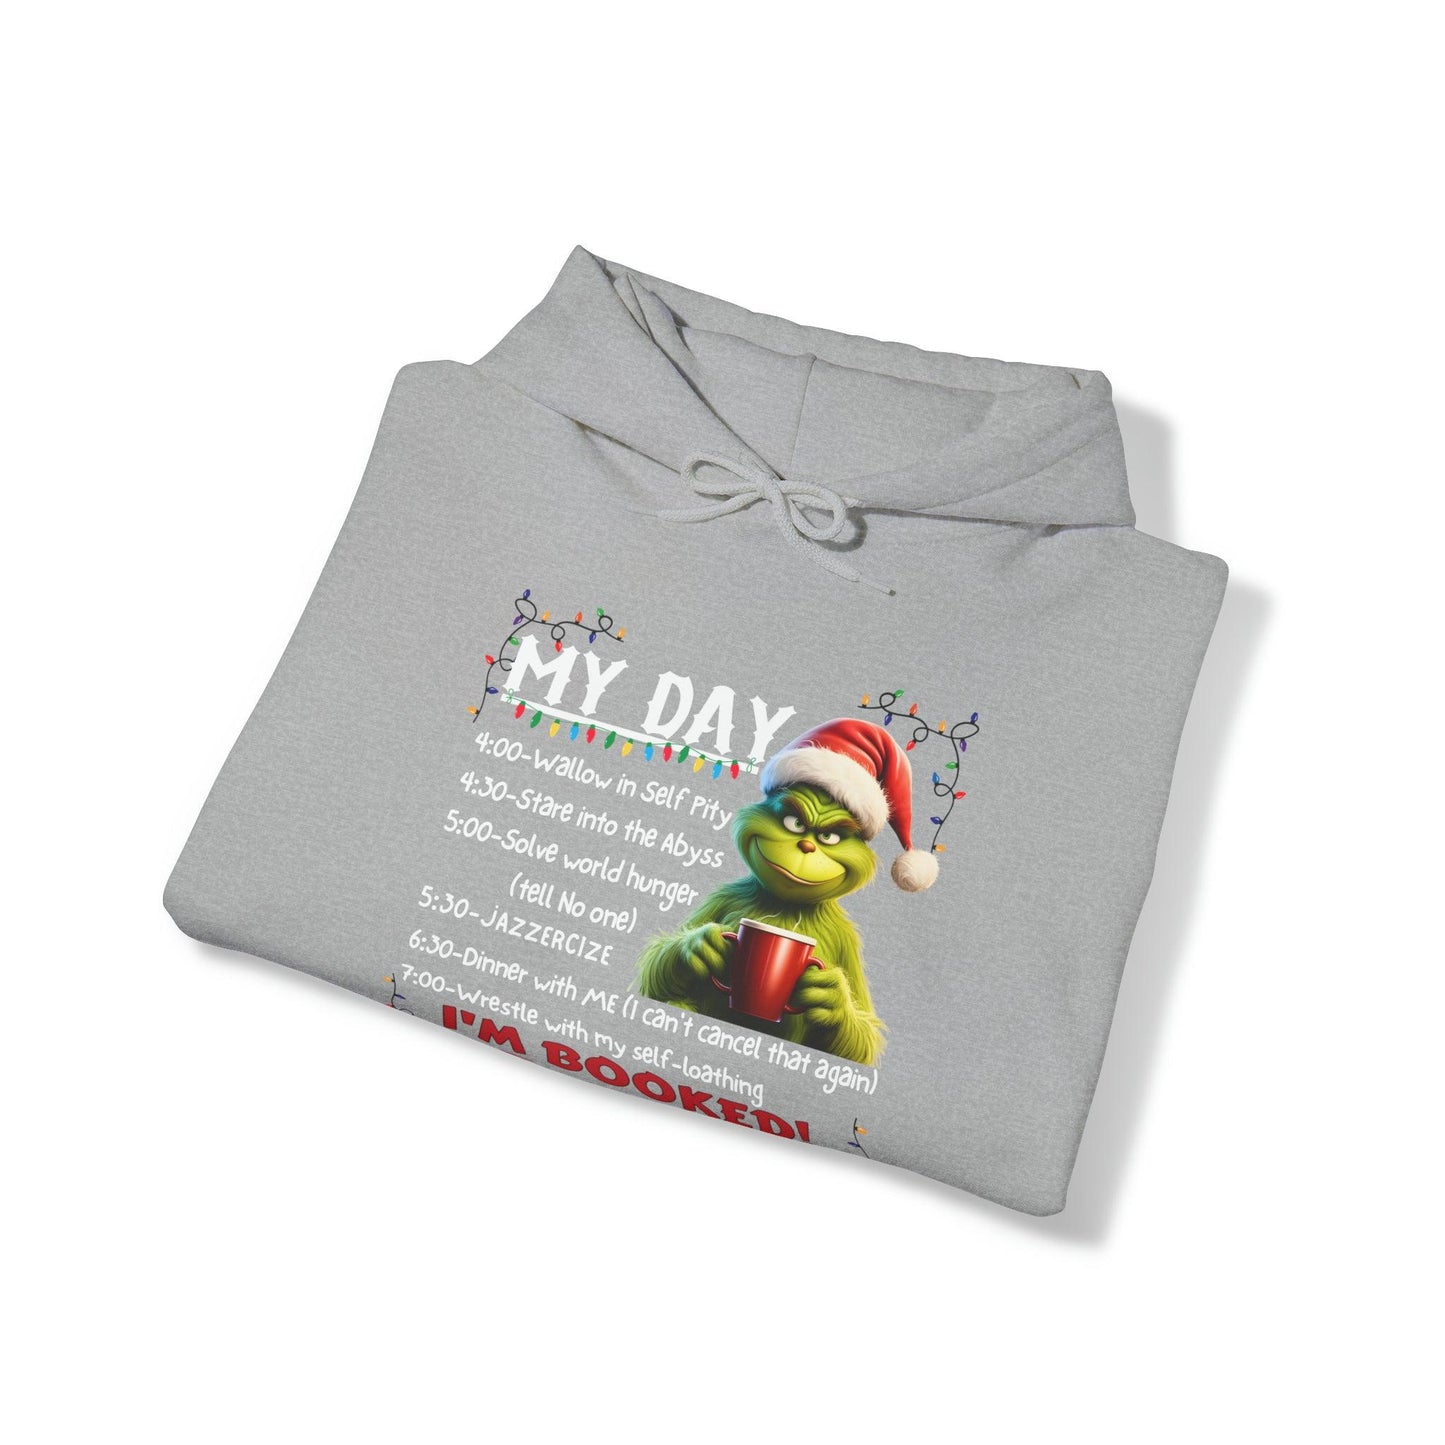 Funny Grinch Hooded Sweatshirt My Day Schedule I'M Booked Sweatshirt Christmas Sweater - Giftsmojo